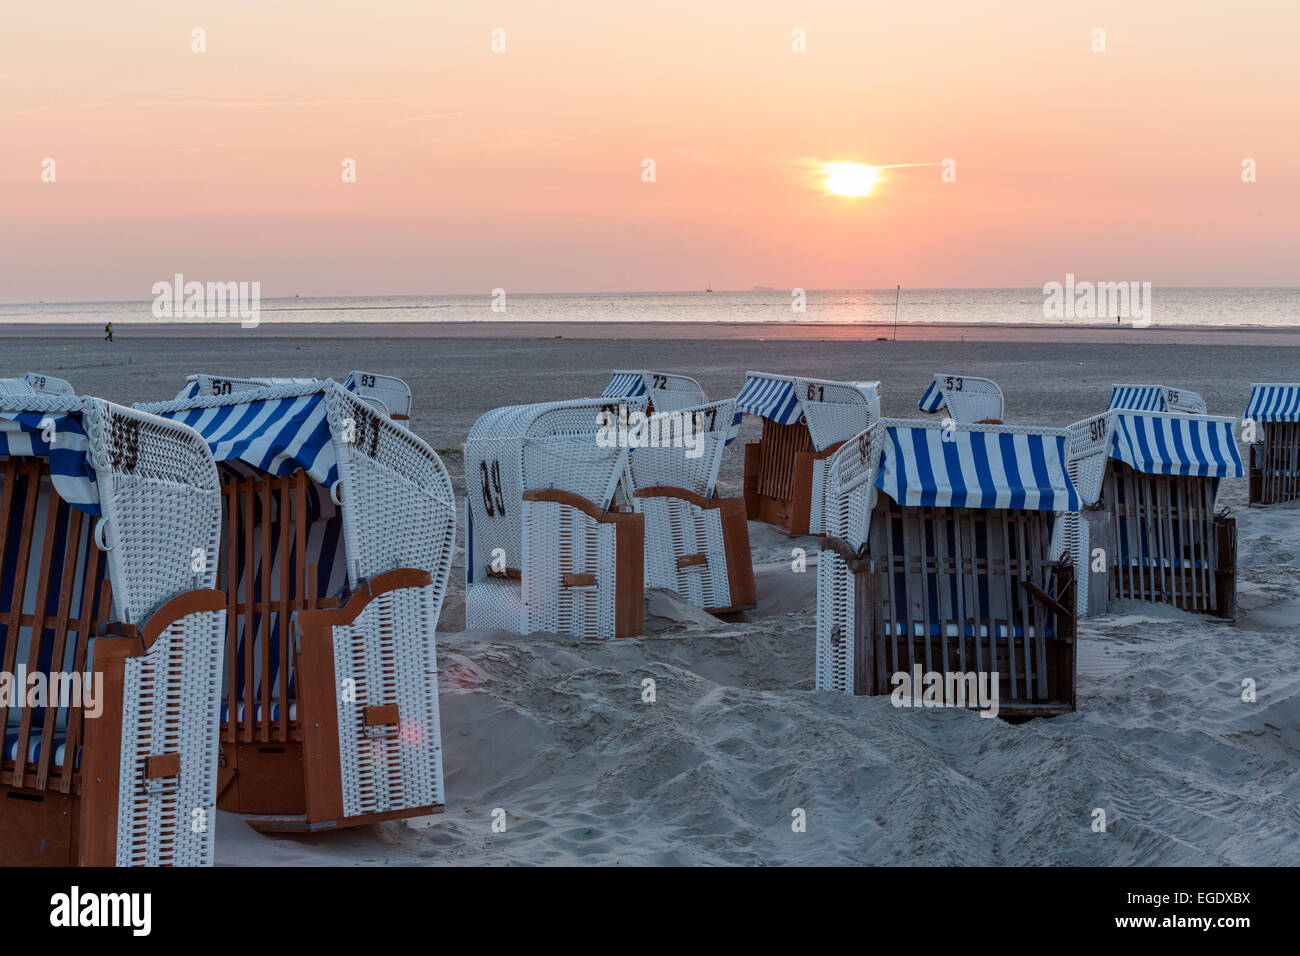 Beach chairs on the beach at sunset, Spiekeroog Island, North Sea, East Frisian Islands, East Frisia, Lower Saxony, Germany, Europe Stock Photo